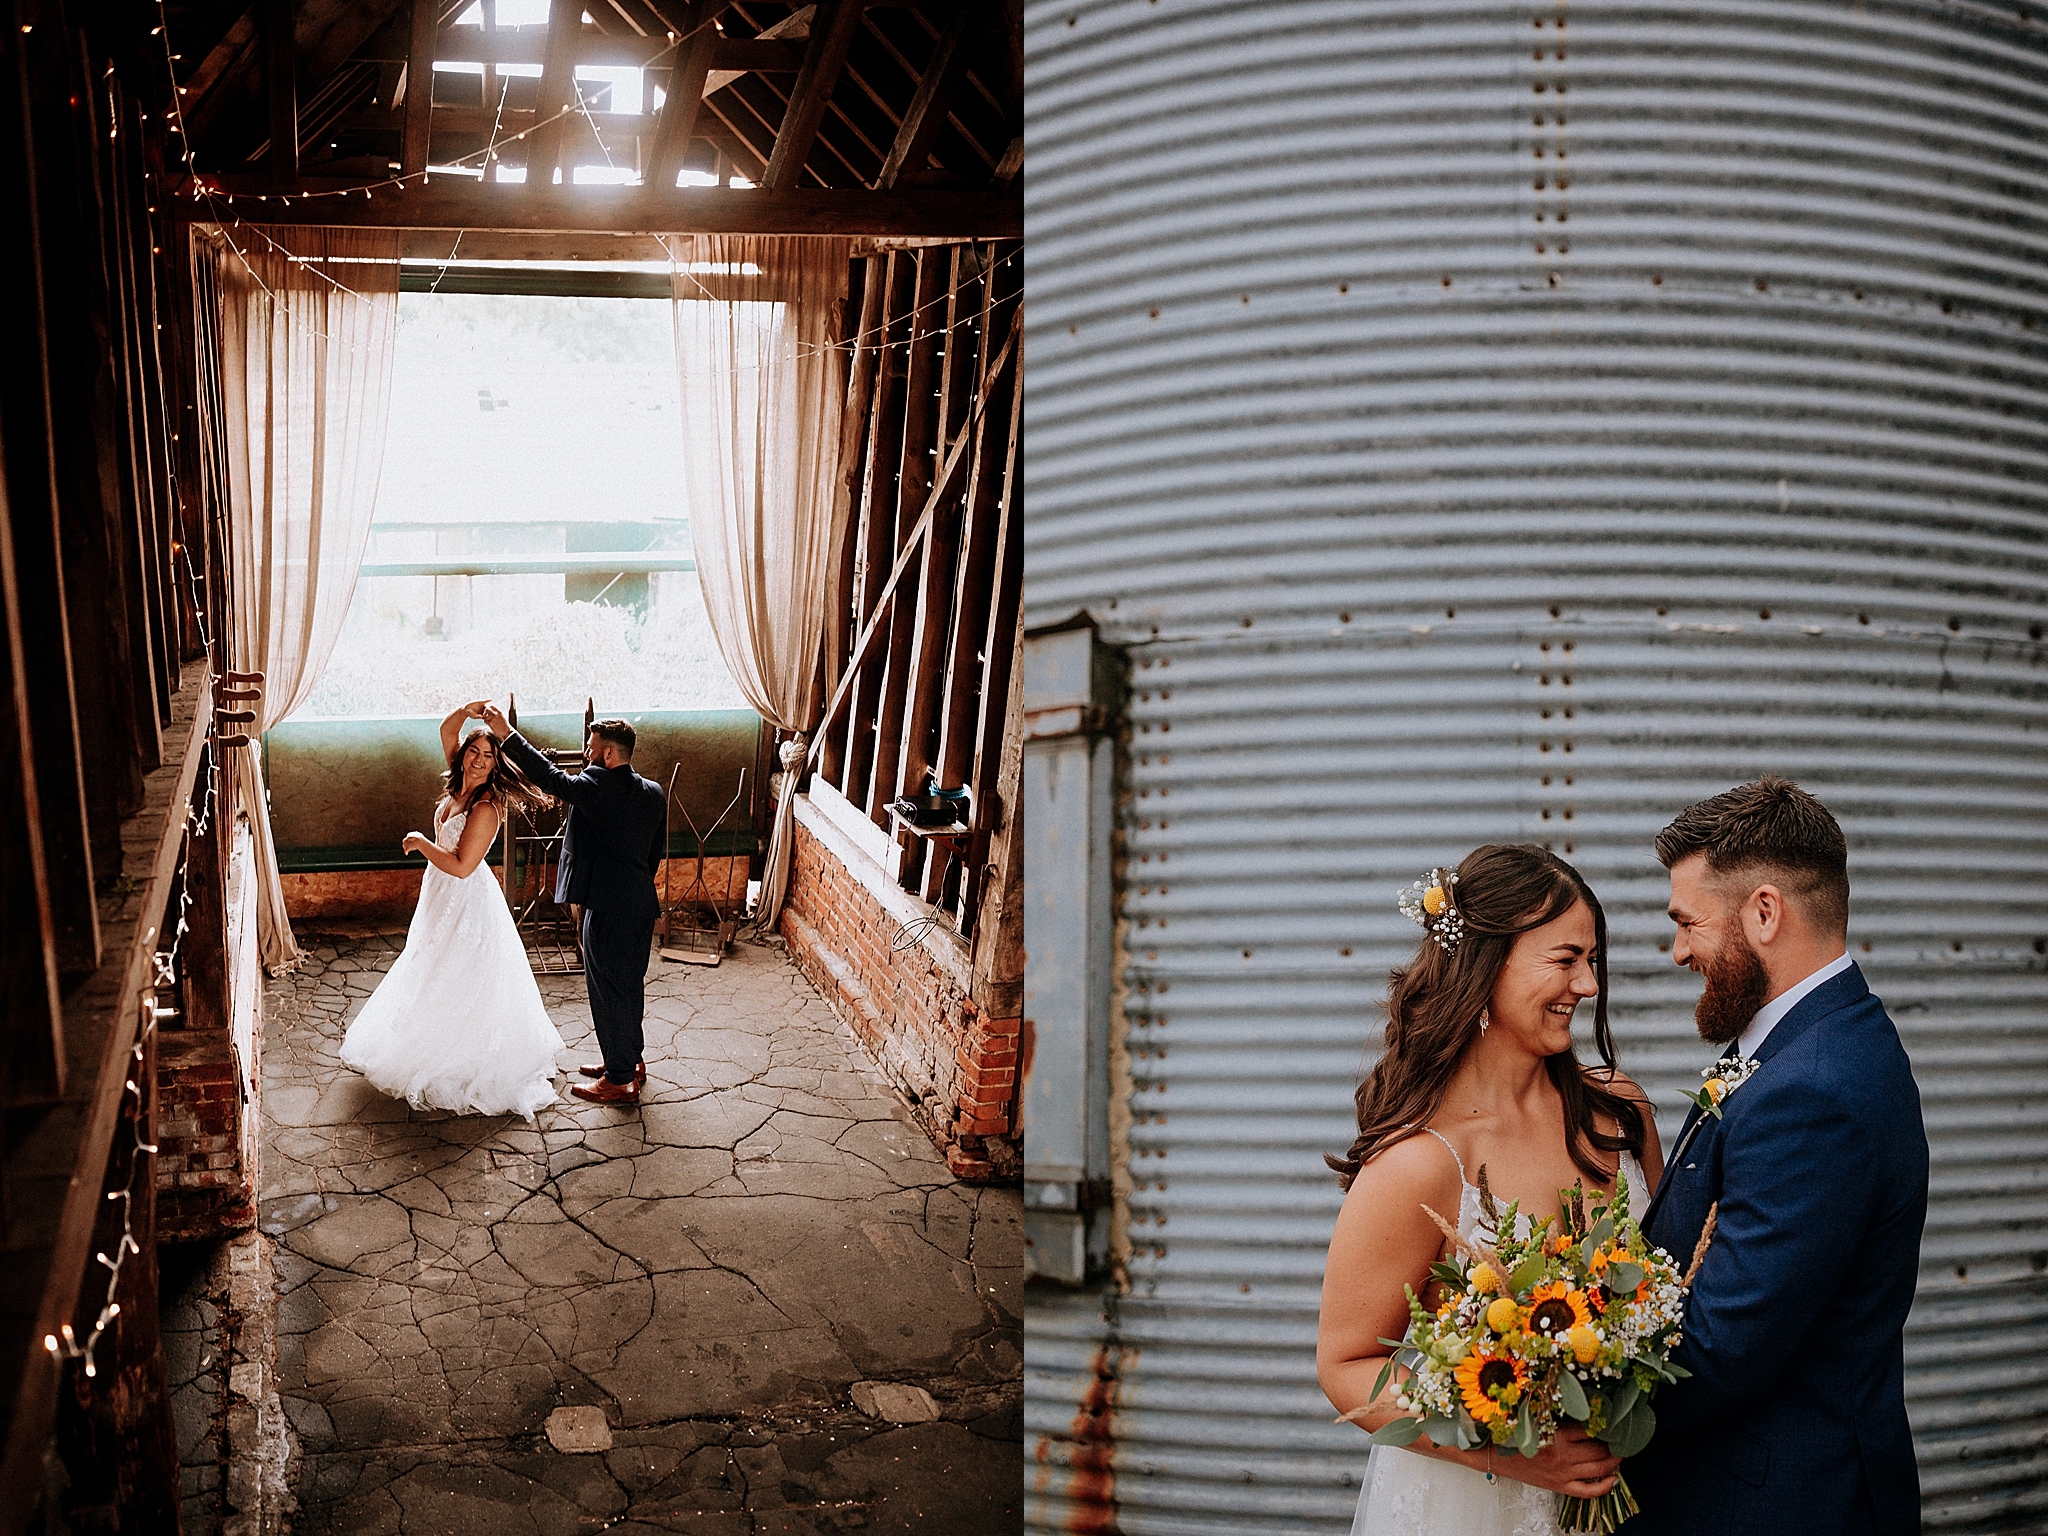 Creative Wedding Photography - Barn Wedding Inspo